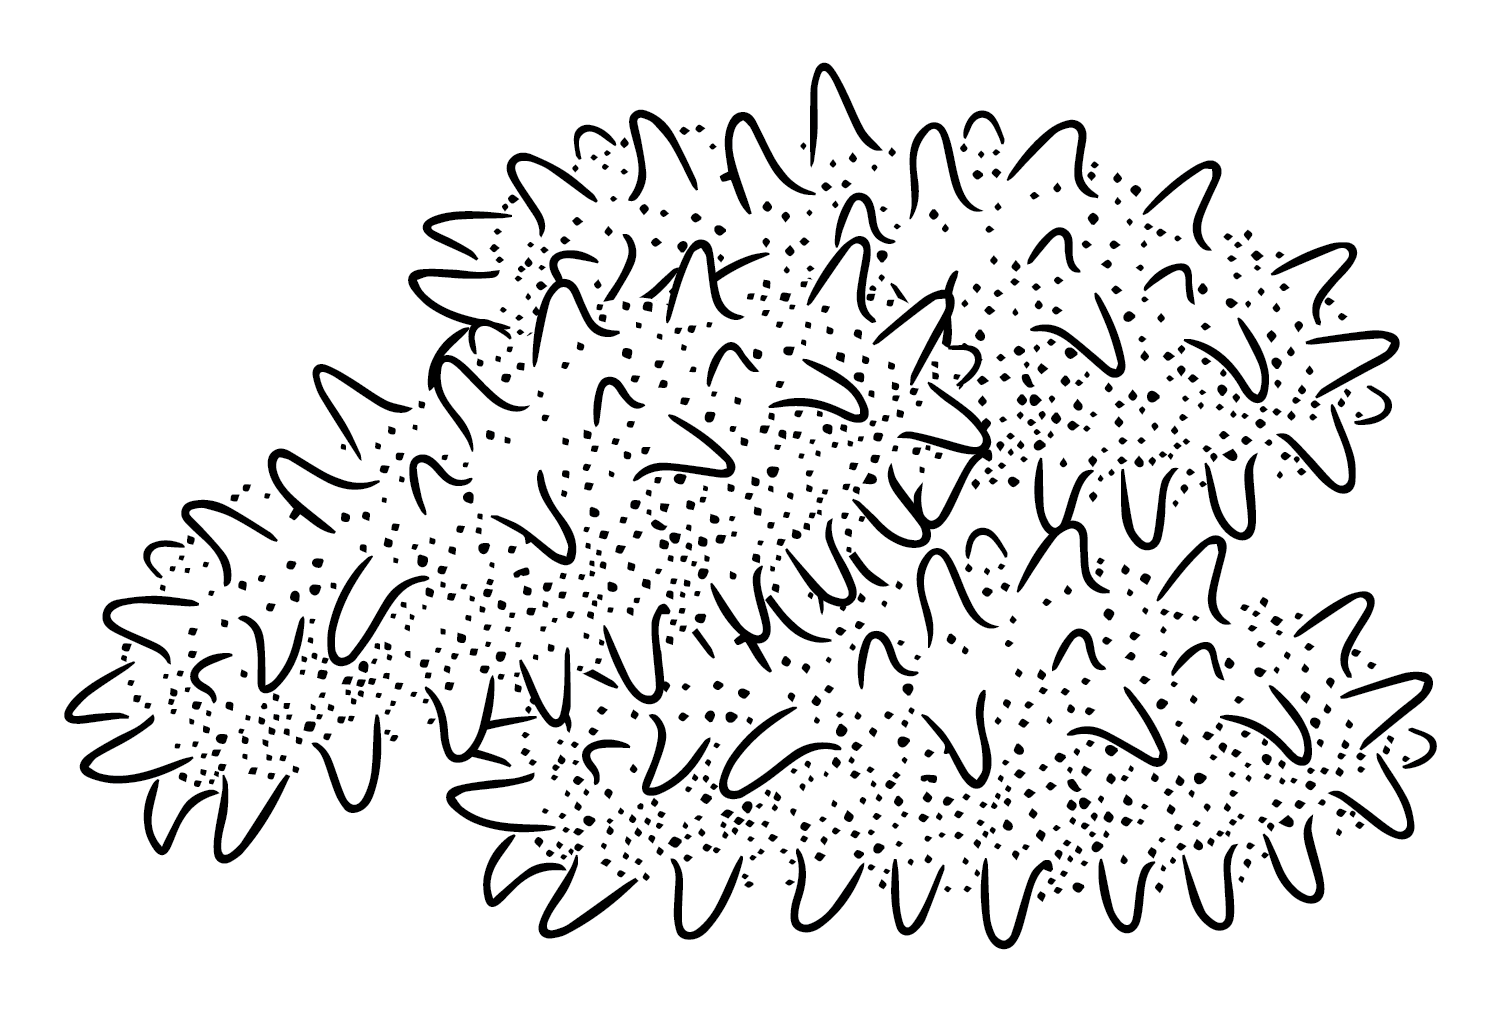 El pepino de mar de pepino de mar